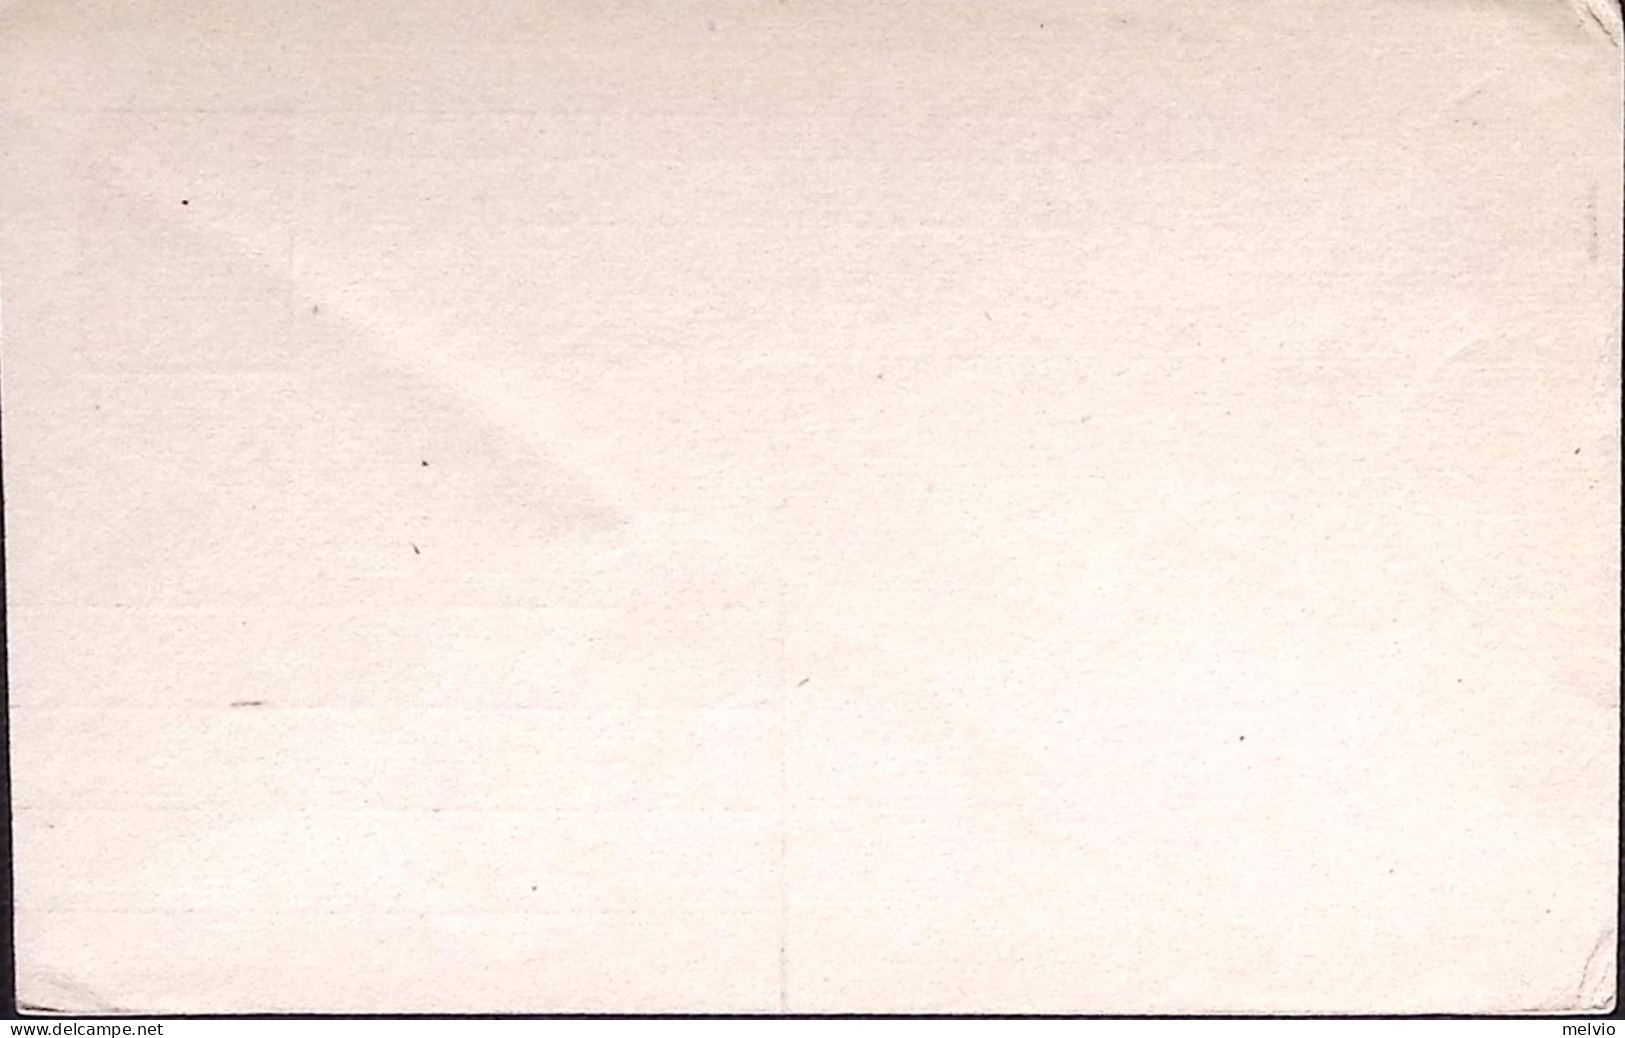 1908-Cartolina Postale Leoni C.10 Mill. 08 Nuova - Entero Postal